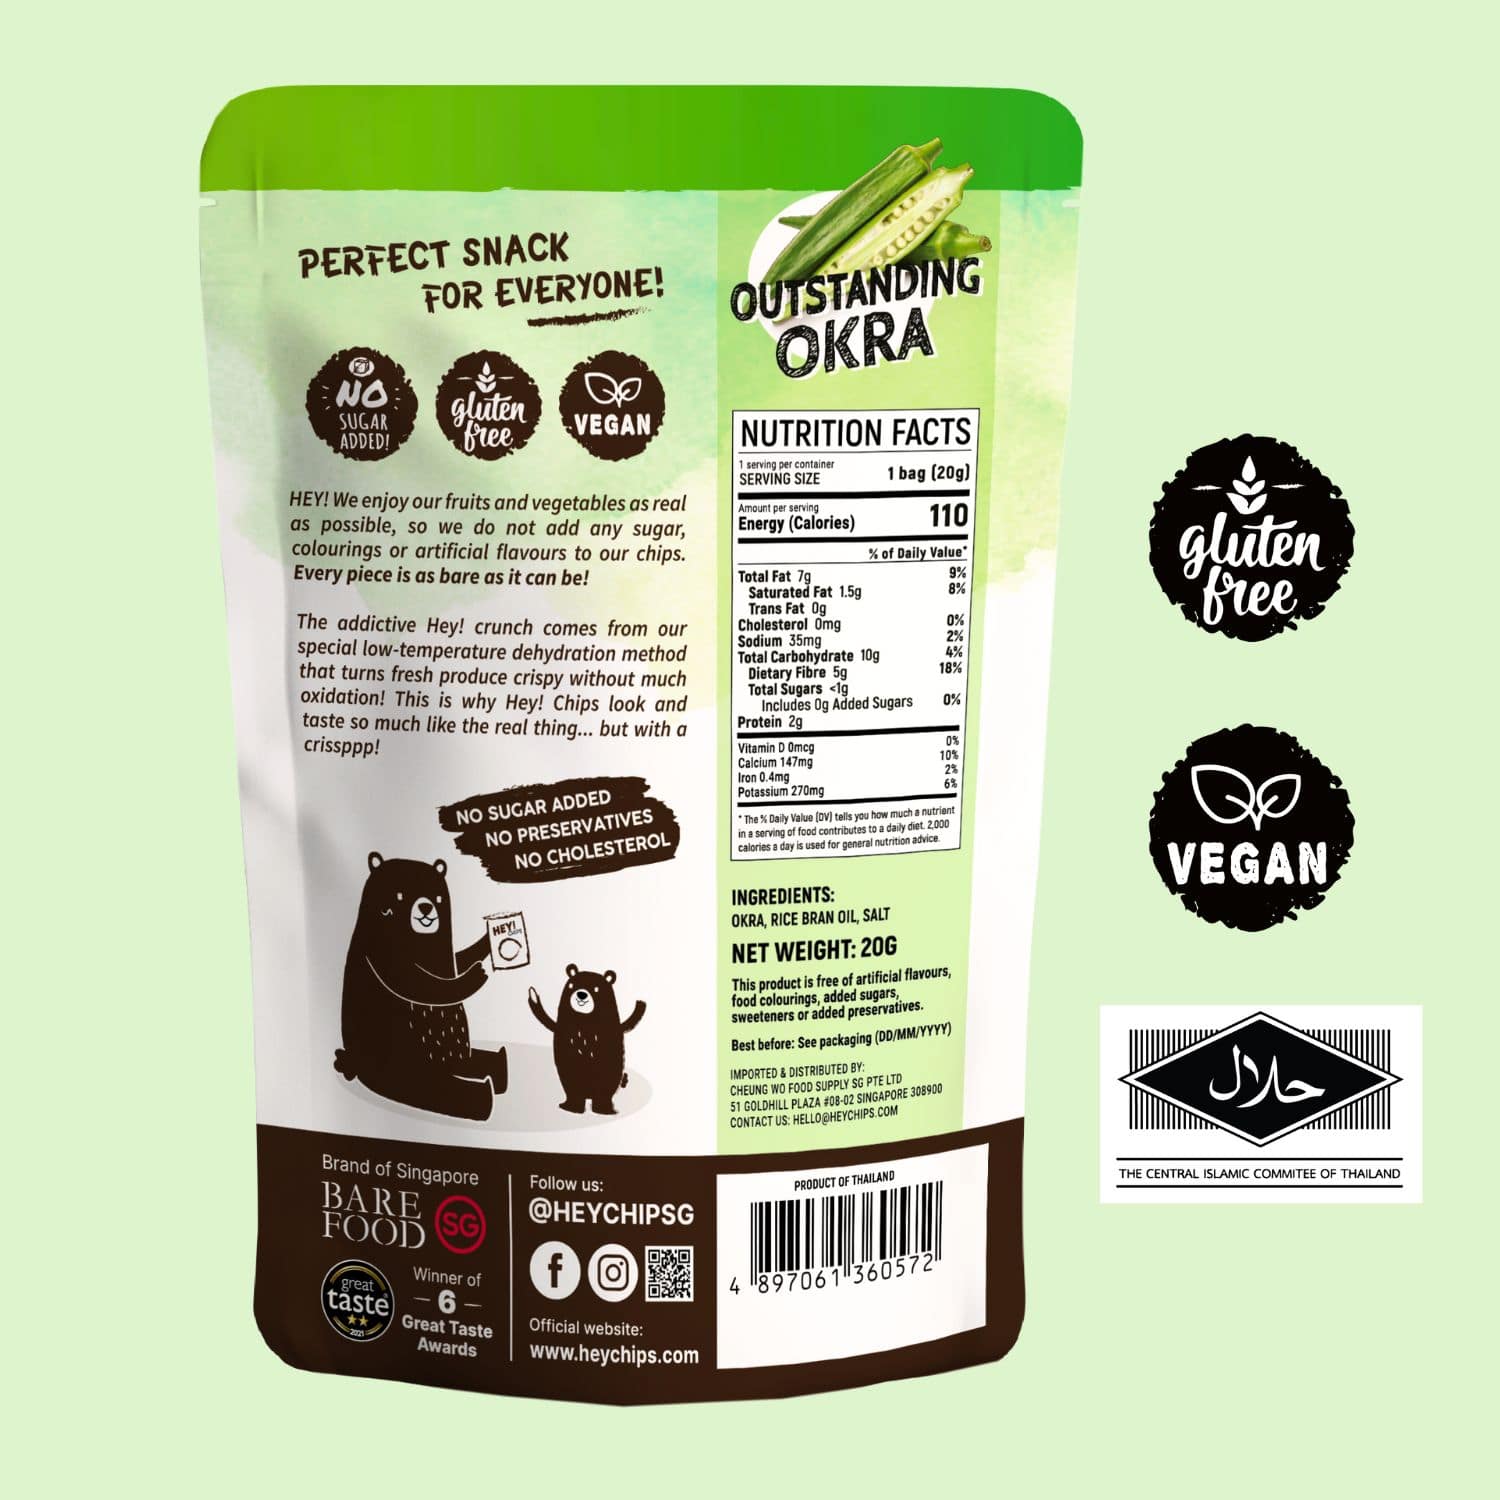 100% Natural Hey! Chips Okra which is Gluten-Free, Halal-Certified, Vegetarian, Vegan, Dairy-free